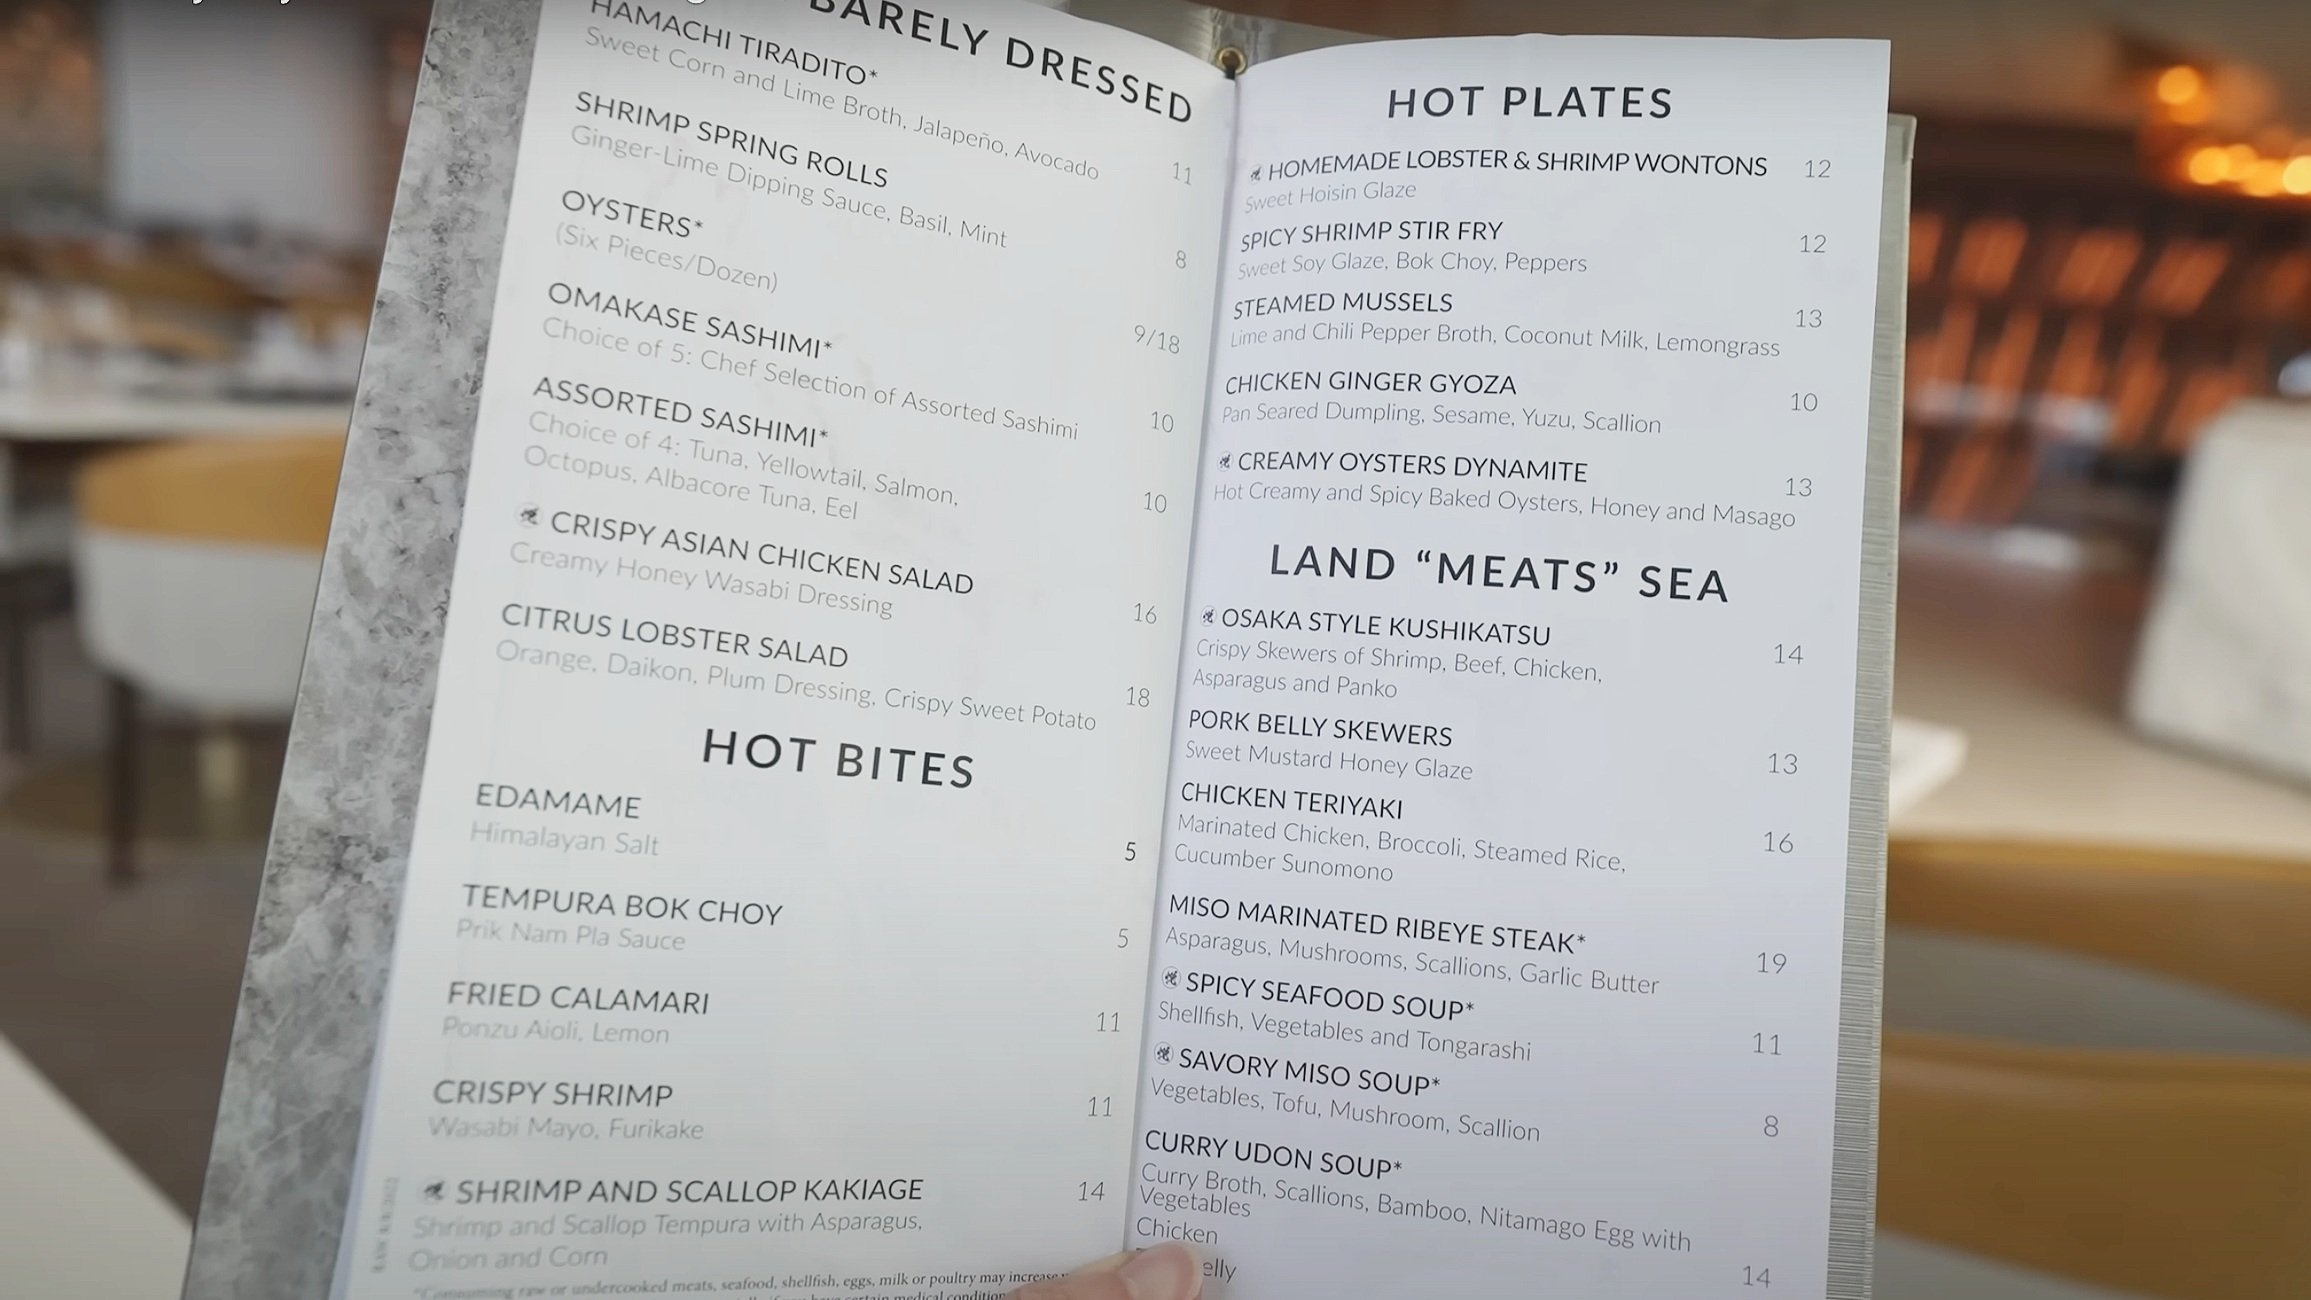  The menu 